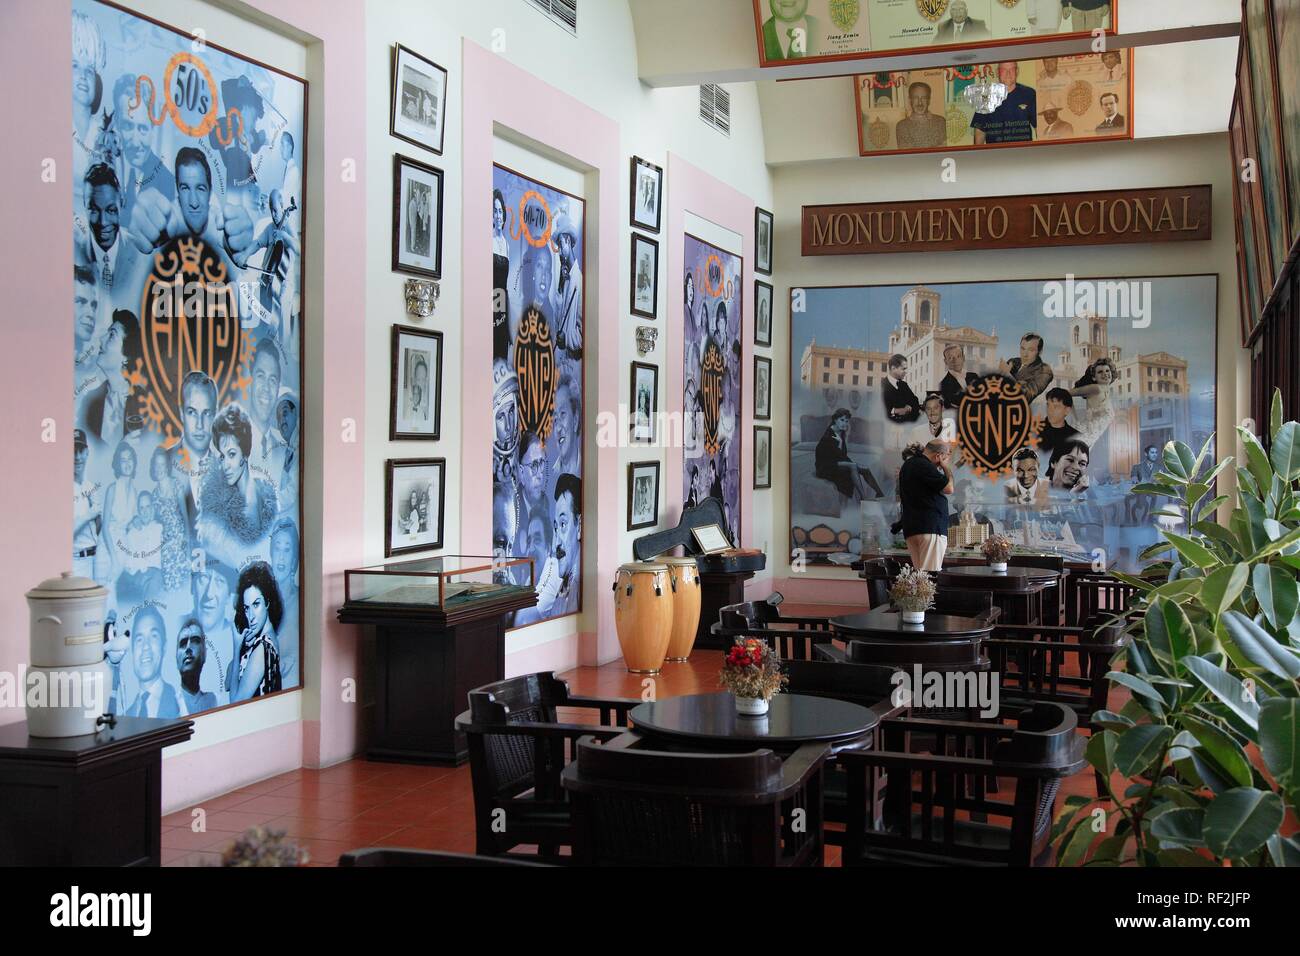 Monumente Nacional, permanent exhibition in the bar at the Hotel Nacional, Havana, Cuba, Caribbean Stock Photo